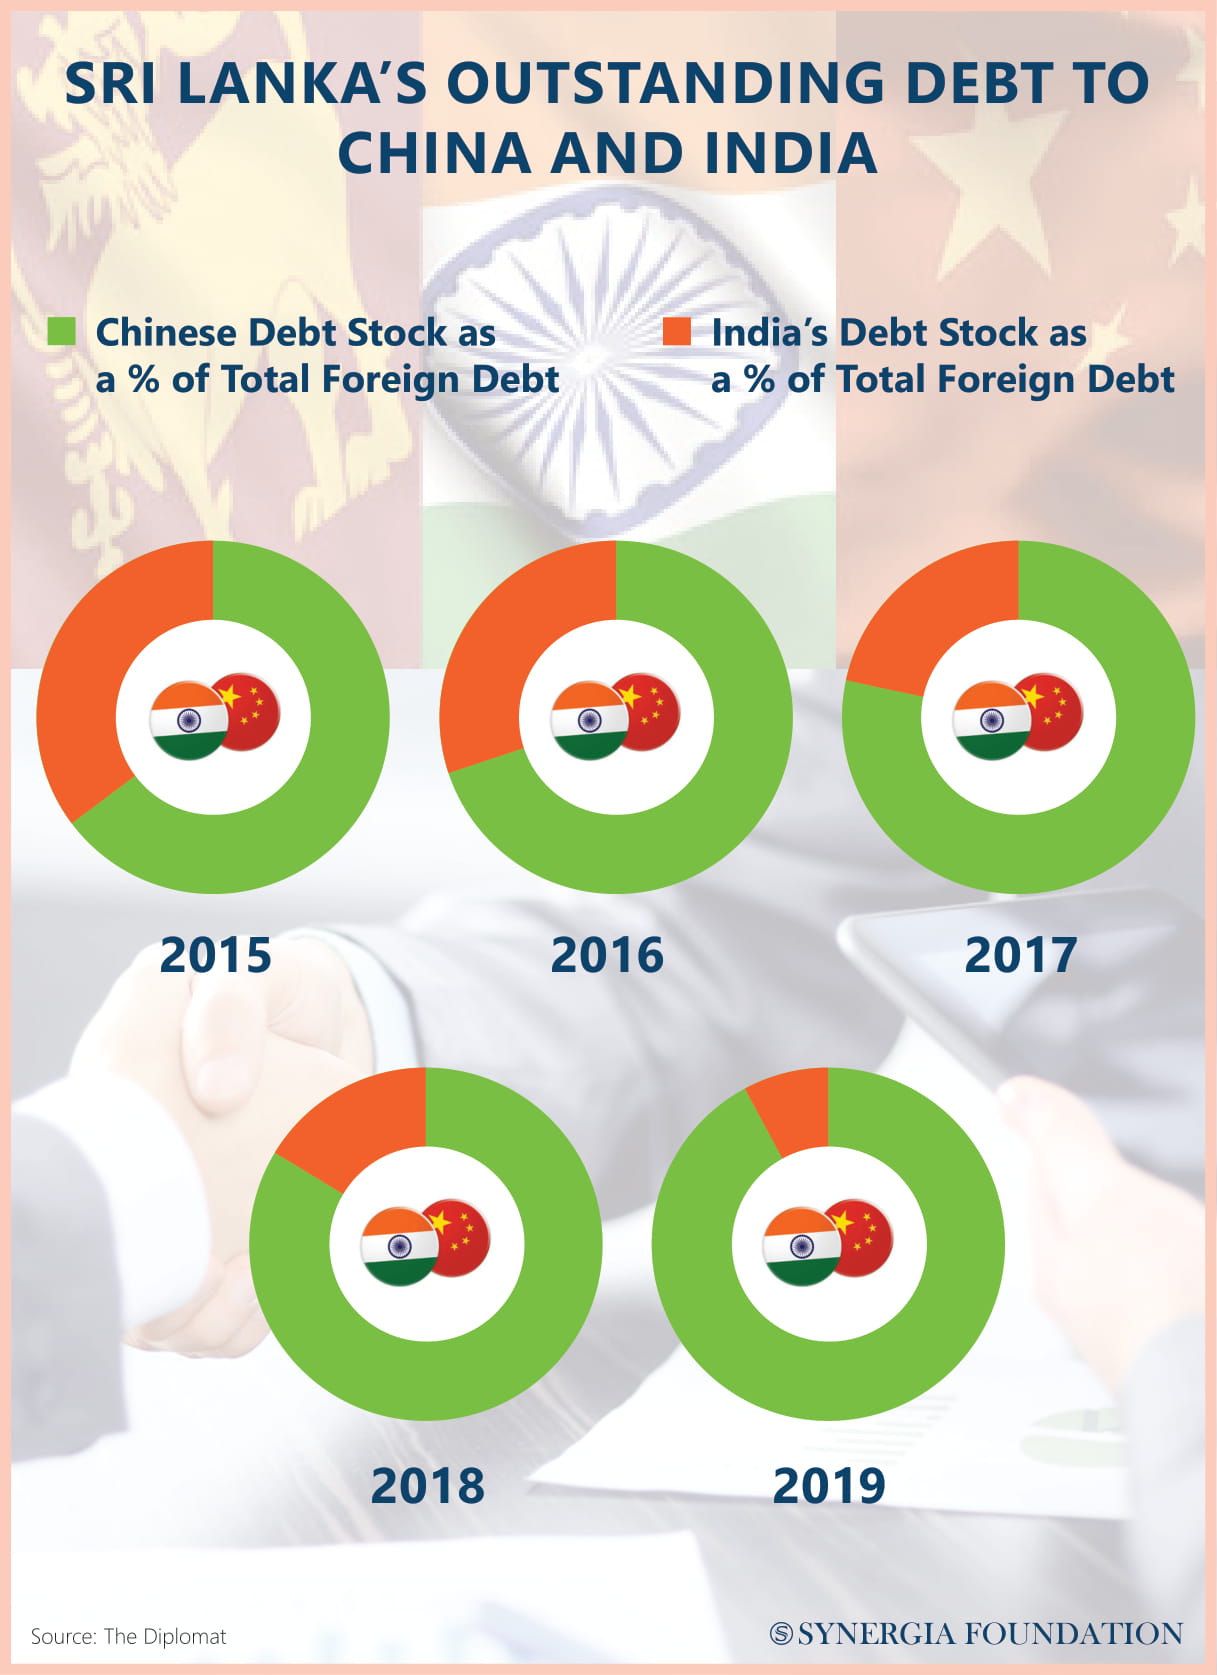 Sri Lanka's debt to China and India